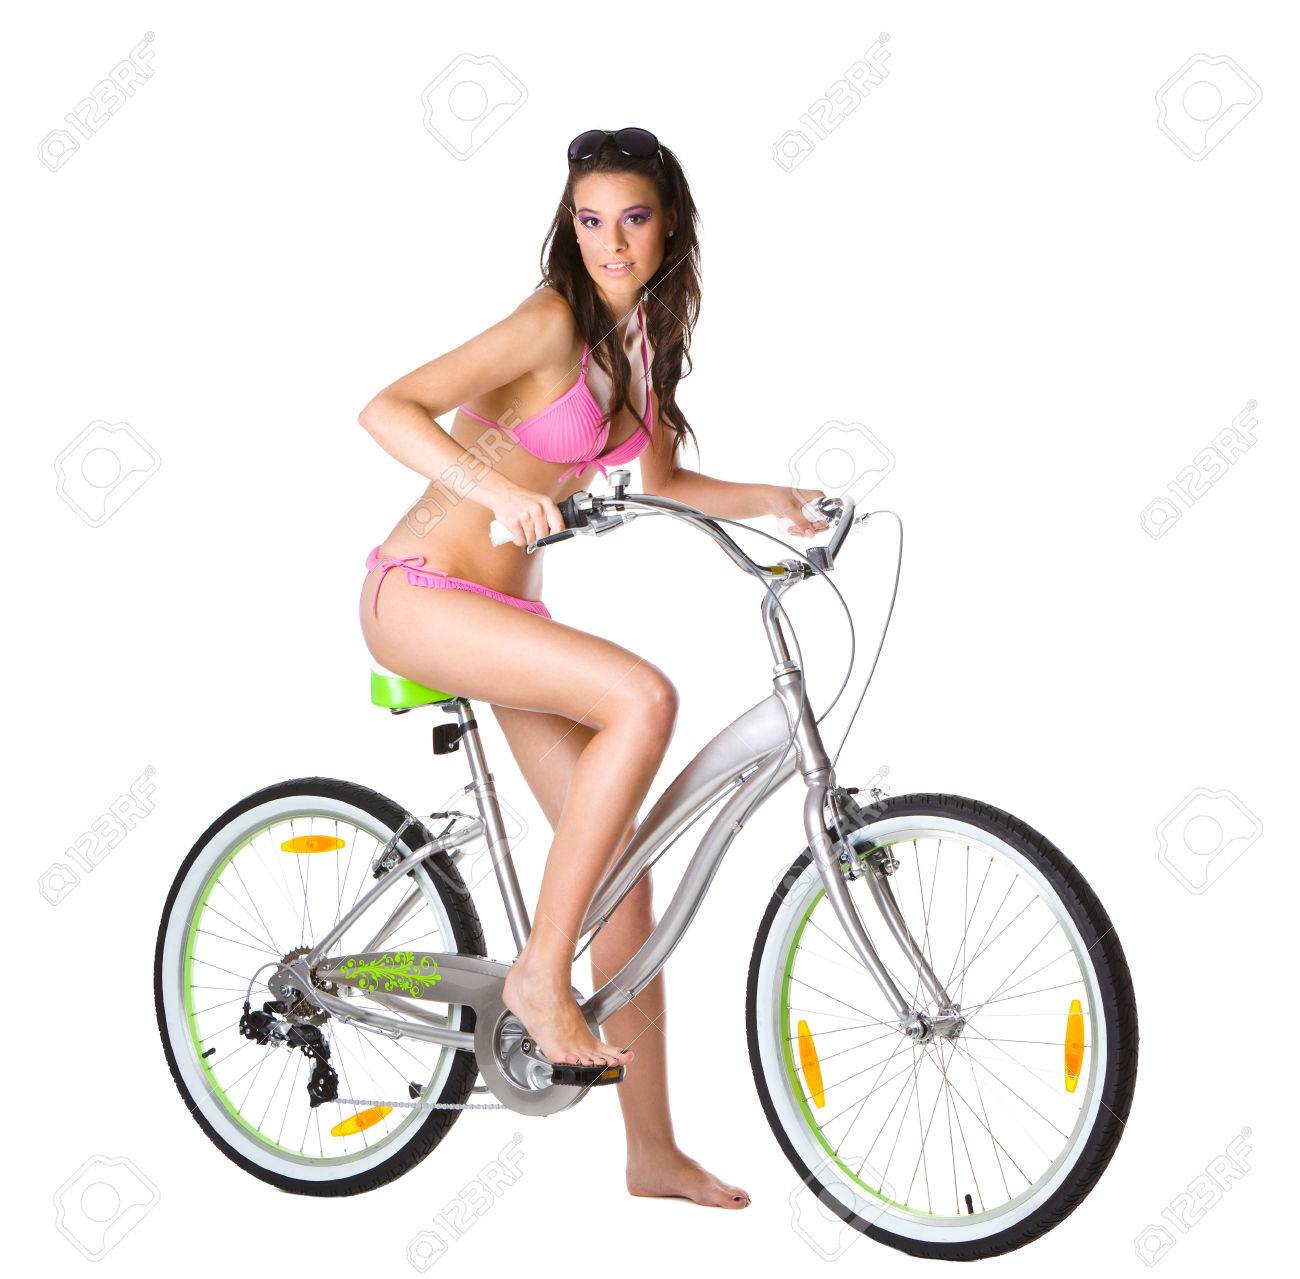 Bike bikini girl in